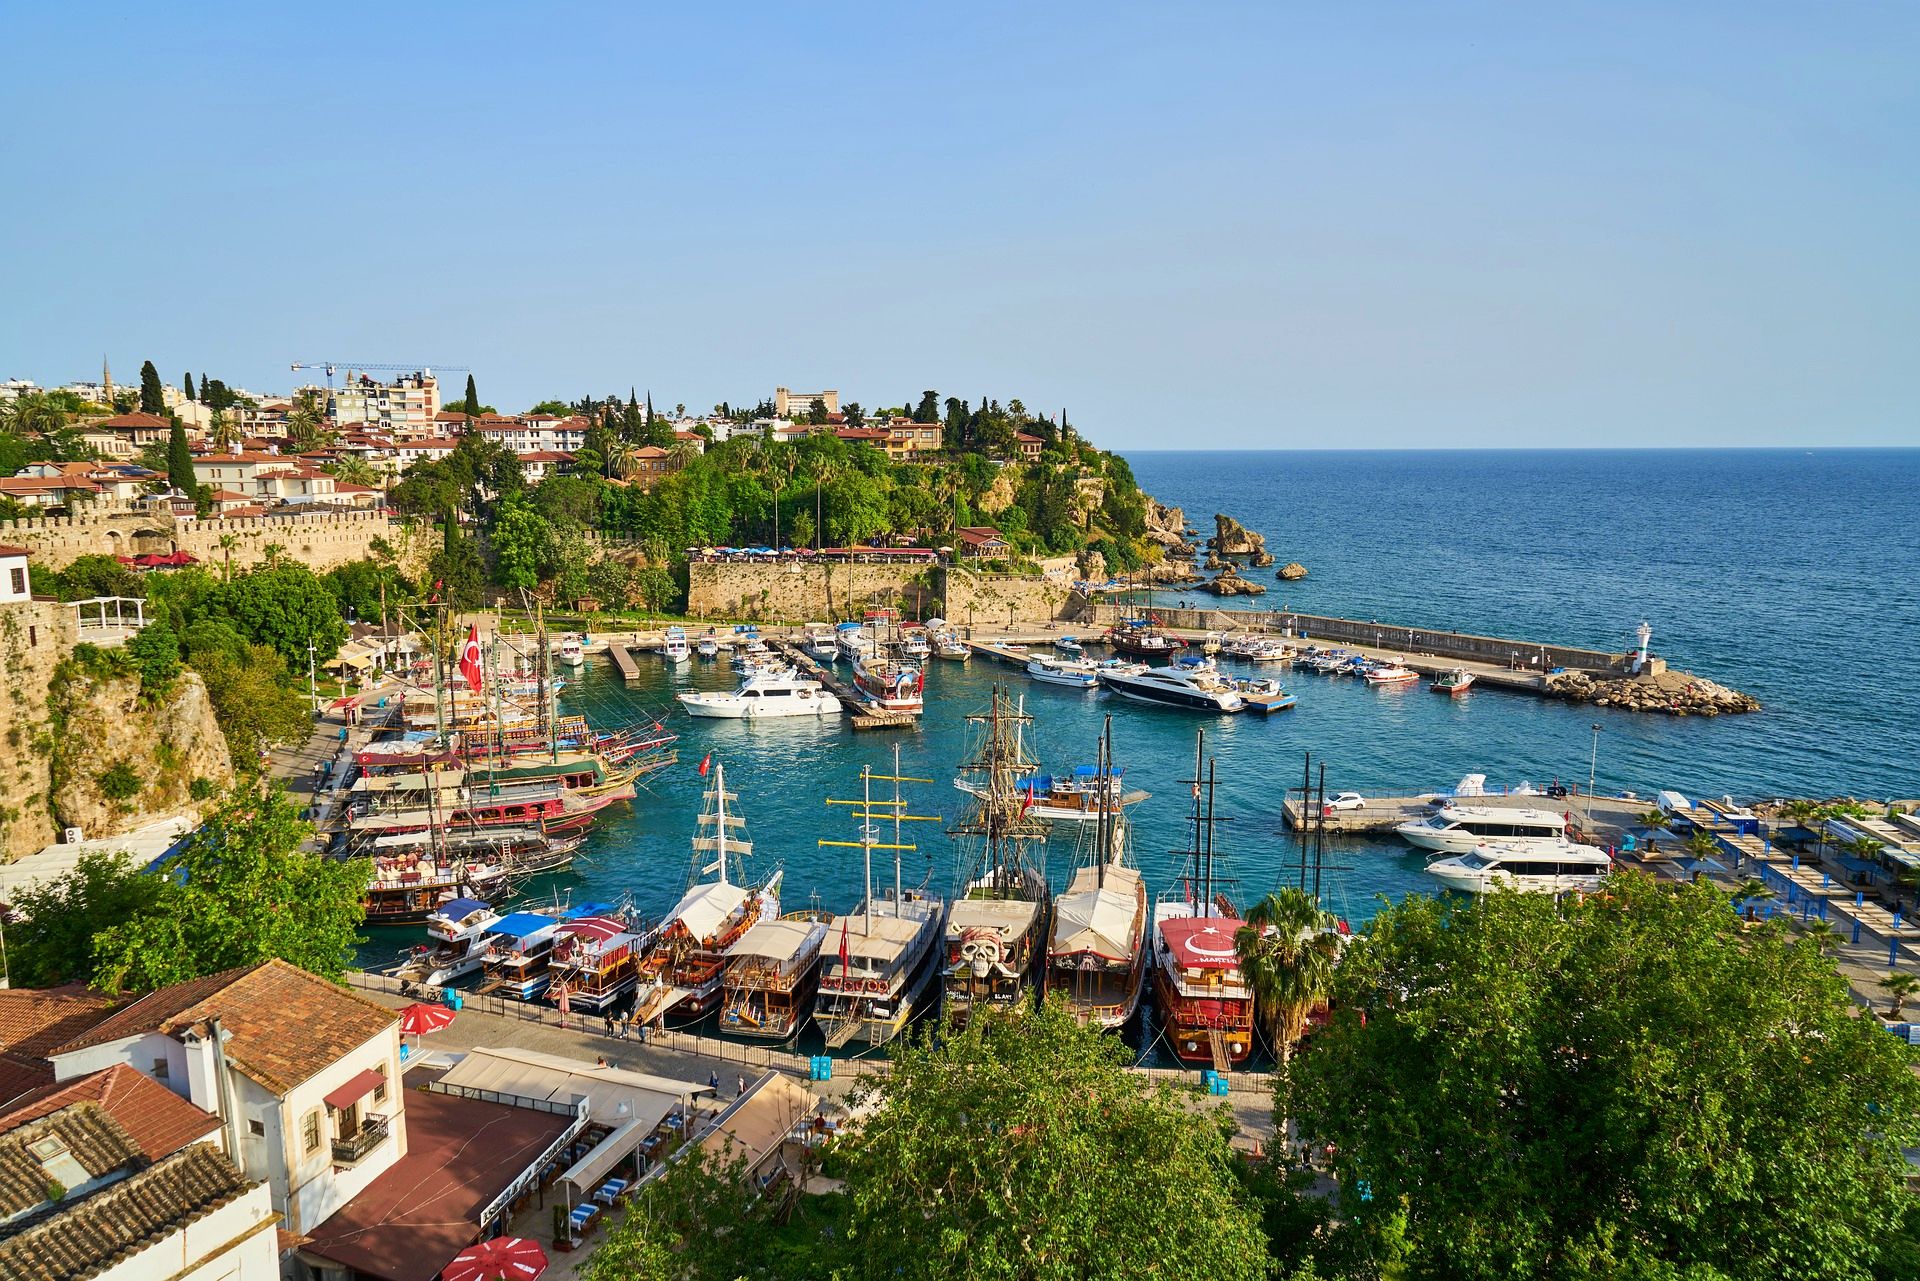 Antalya, Turkiye (Turkey) - one of the cheapest places for digital nomads